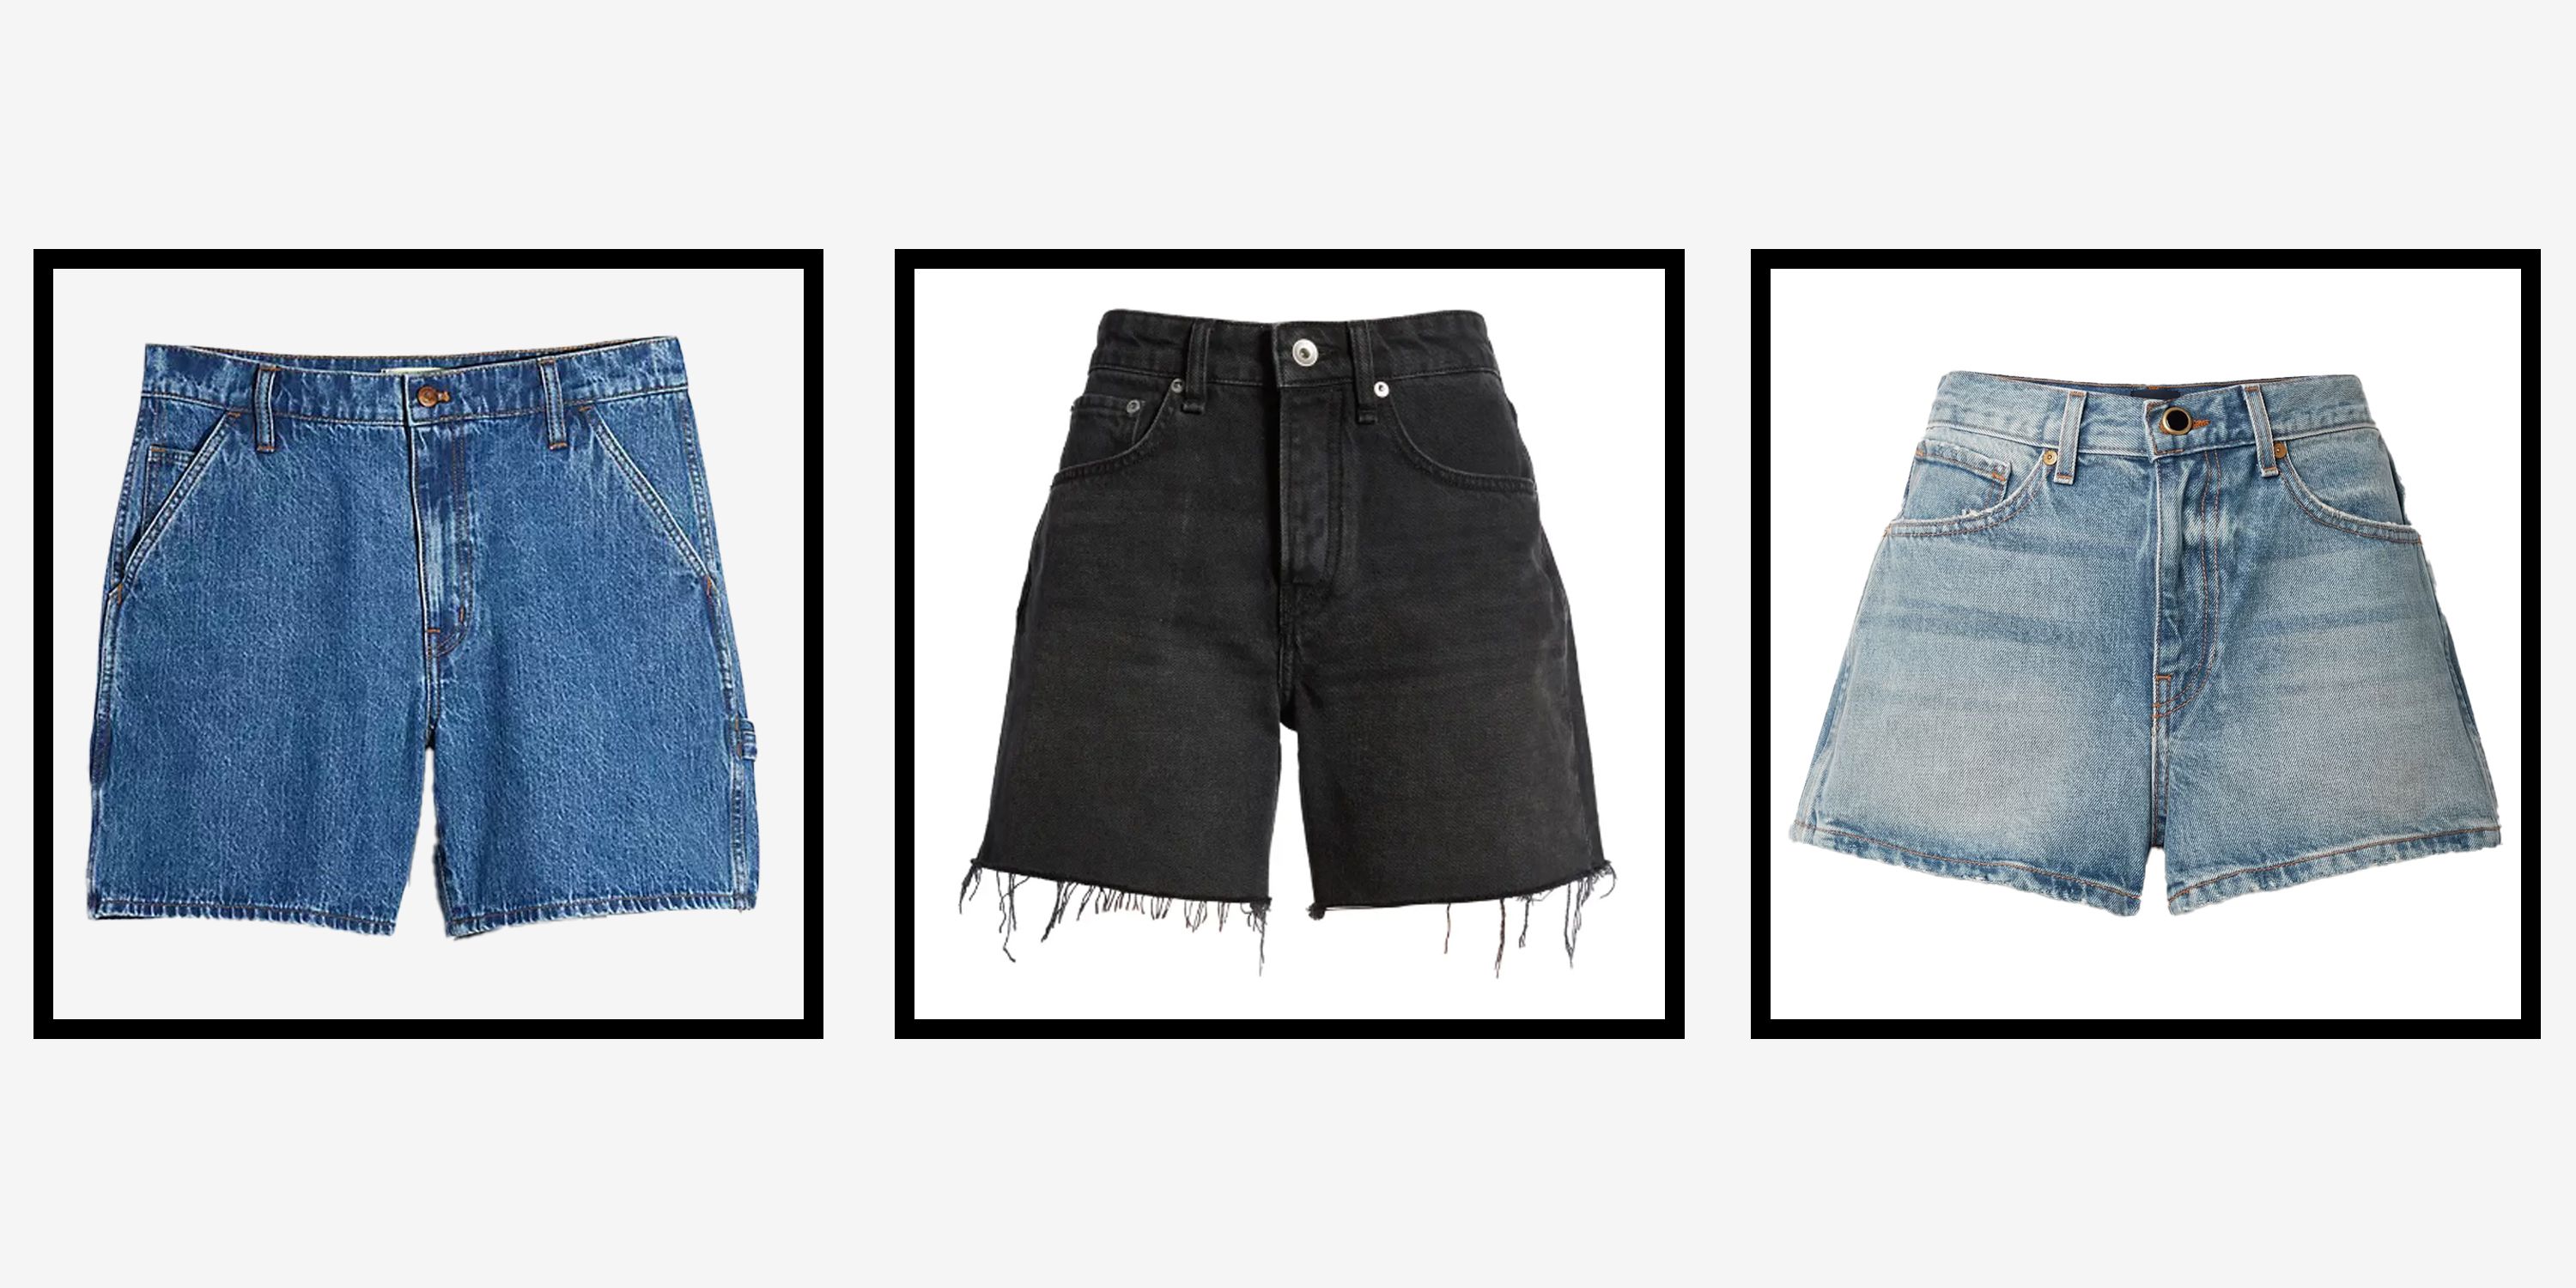 debi tomlinson recommends short jean shorts photos pic